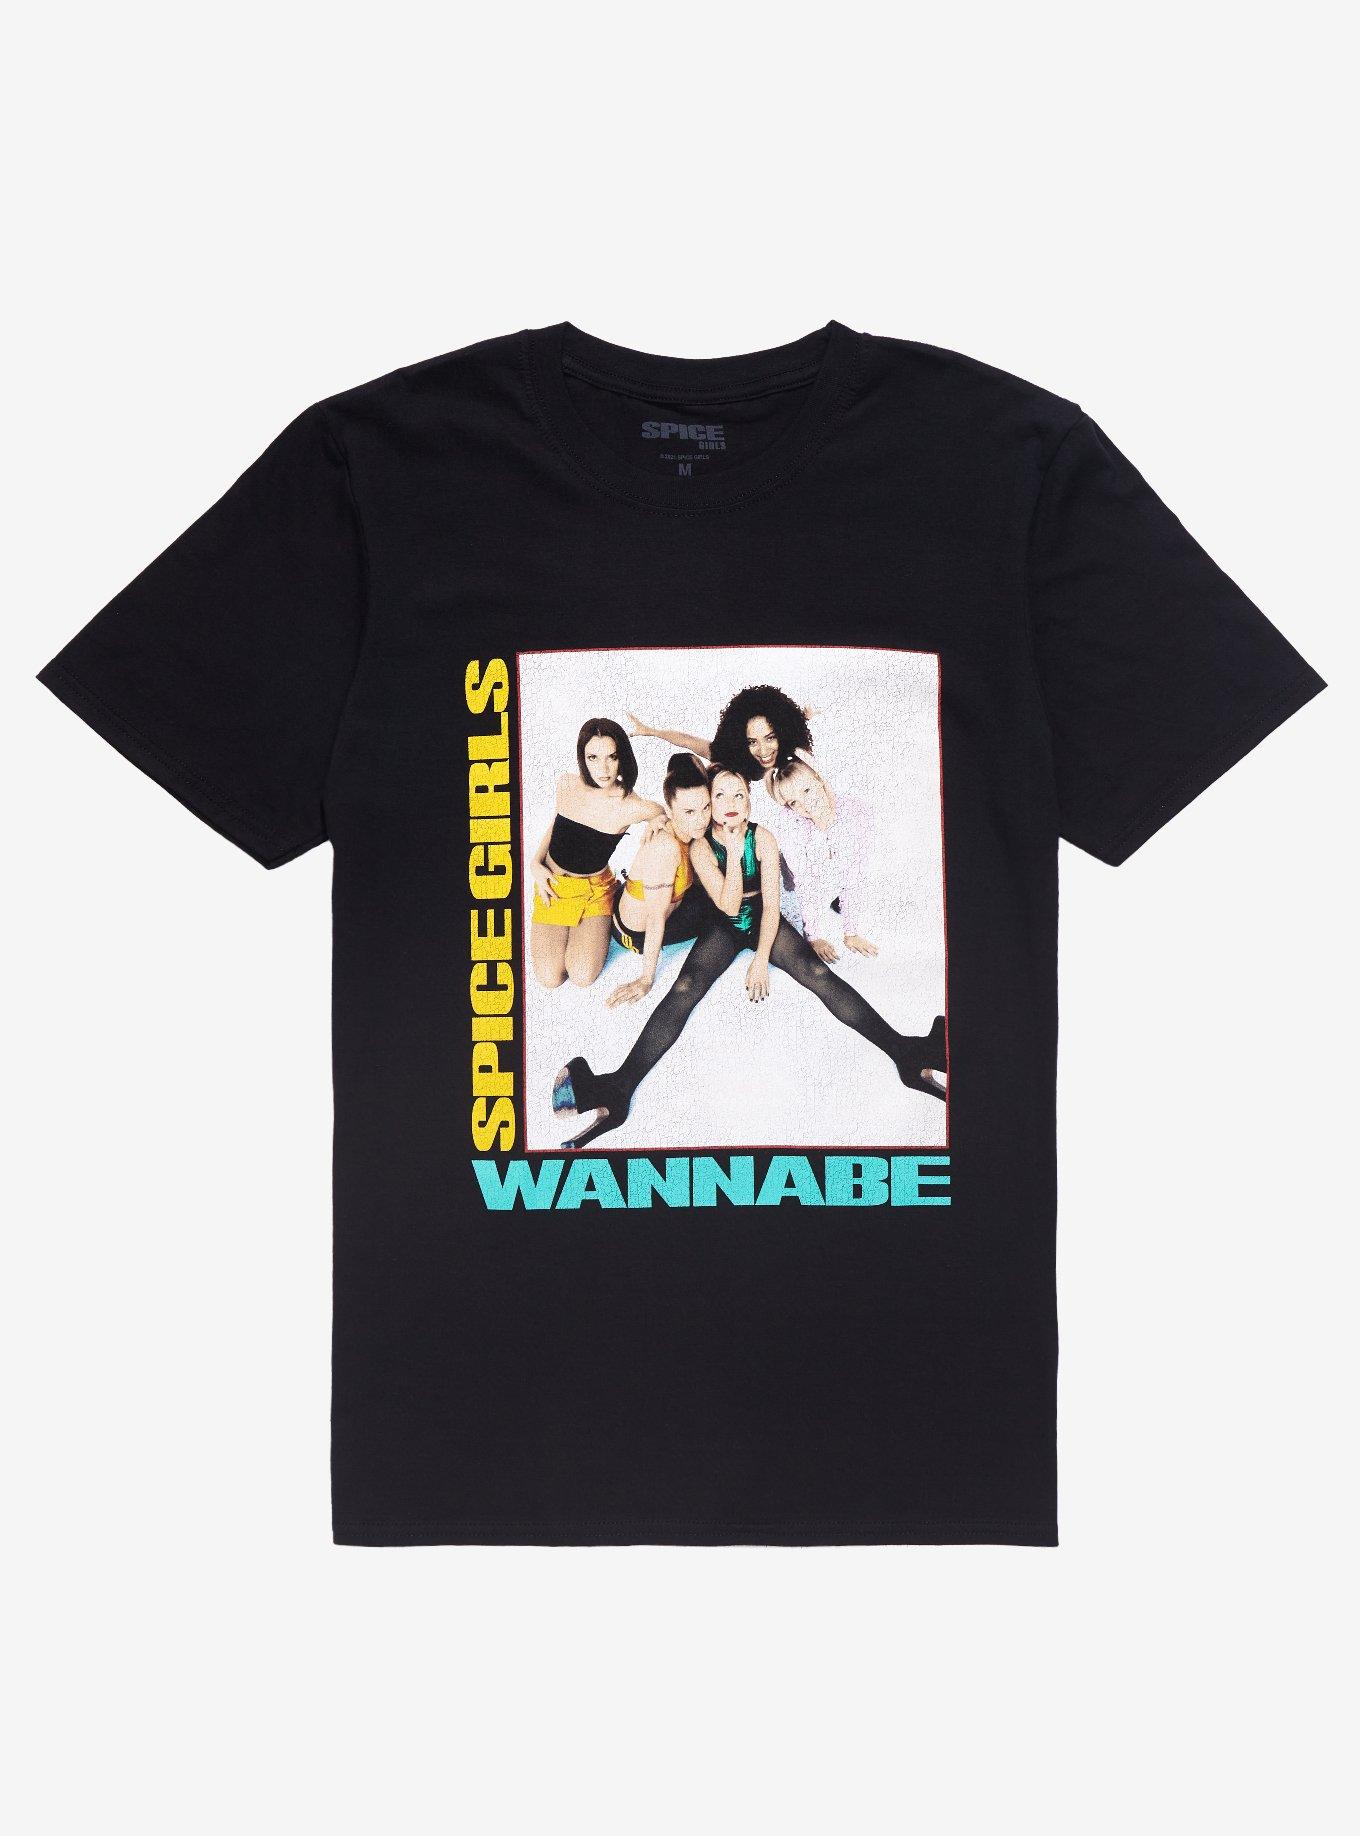 Spice Girls Wannabe T-Shirt | Hot Topic